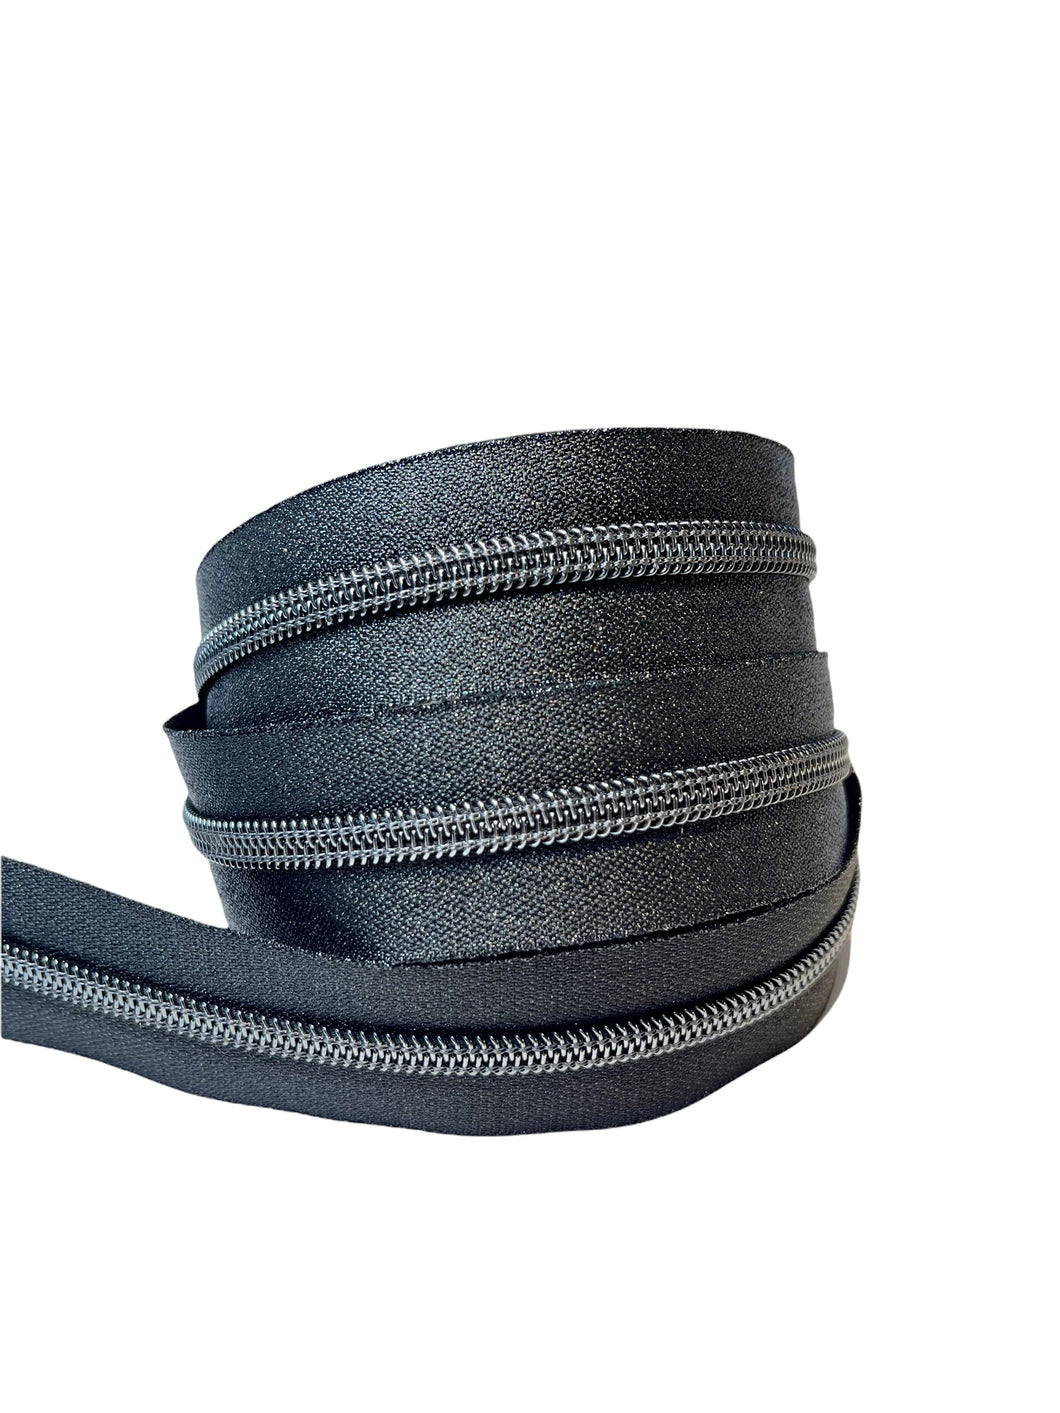 #5 Metallic Nylon Zipper Tape - Black - by the yard